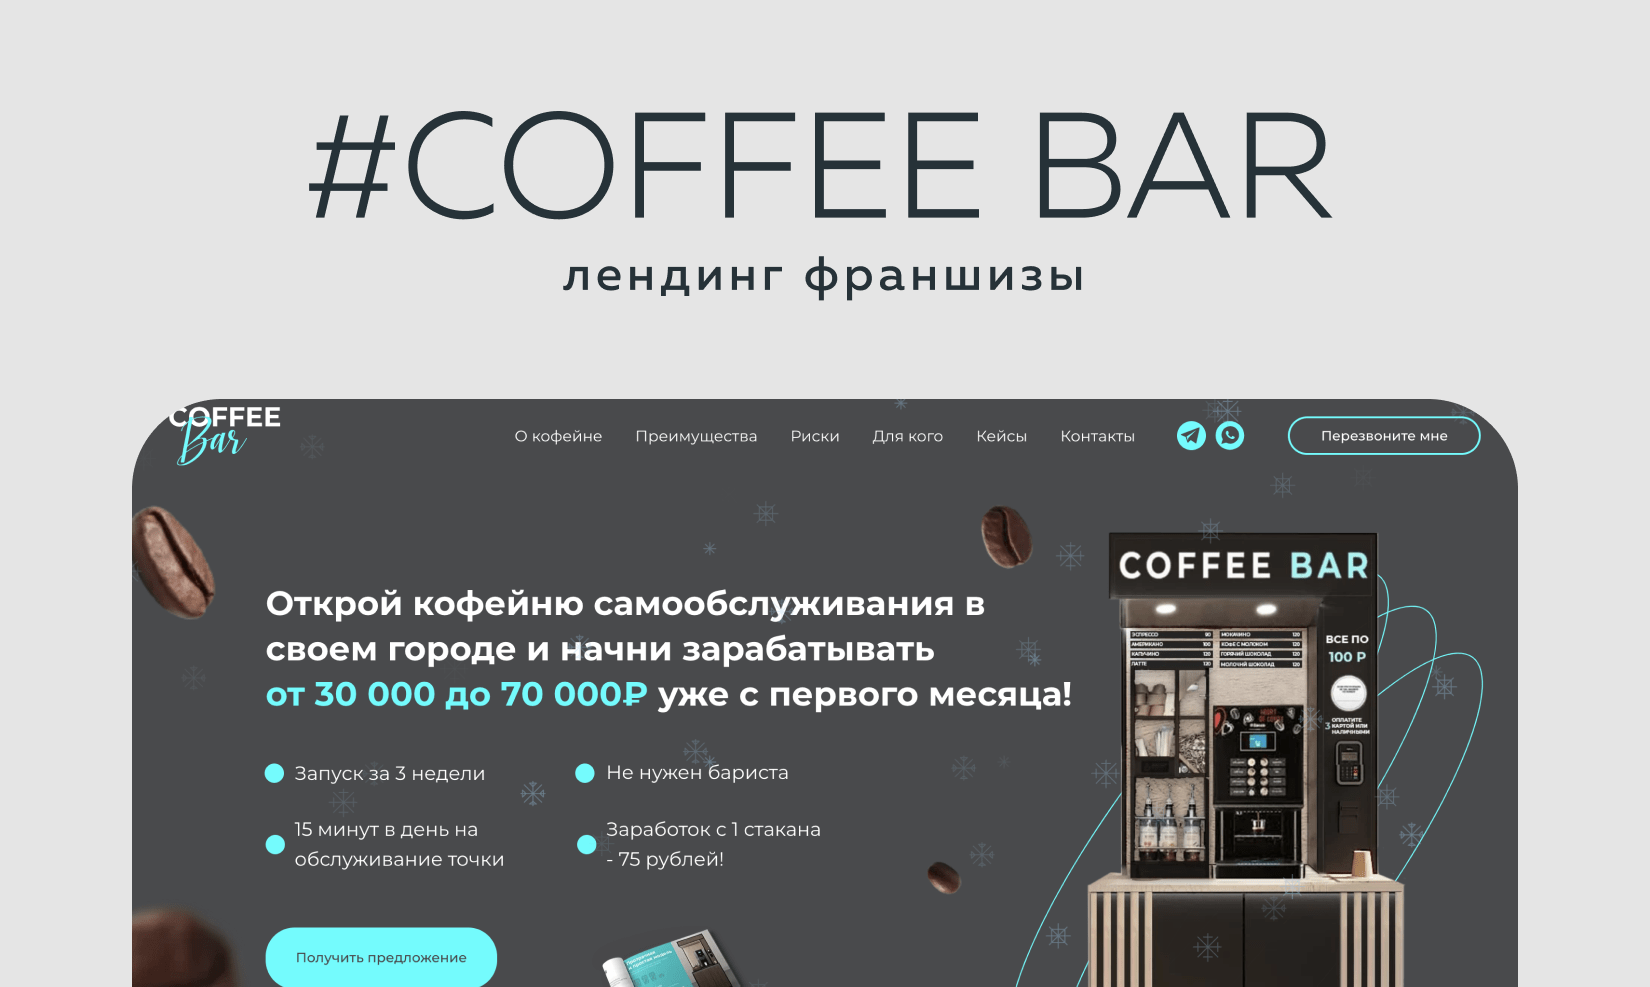 #Coffee bar